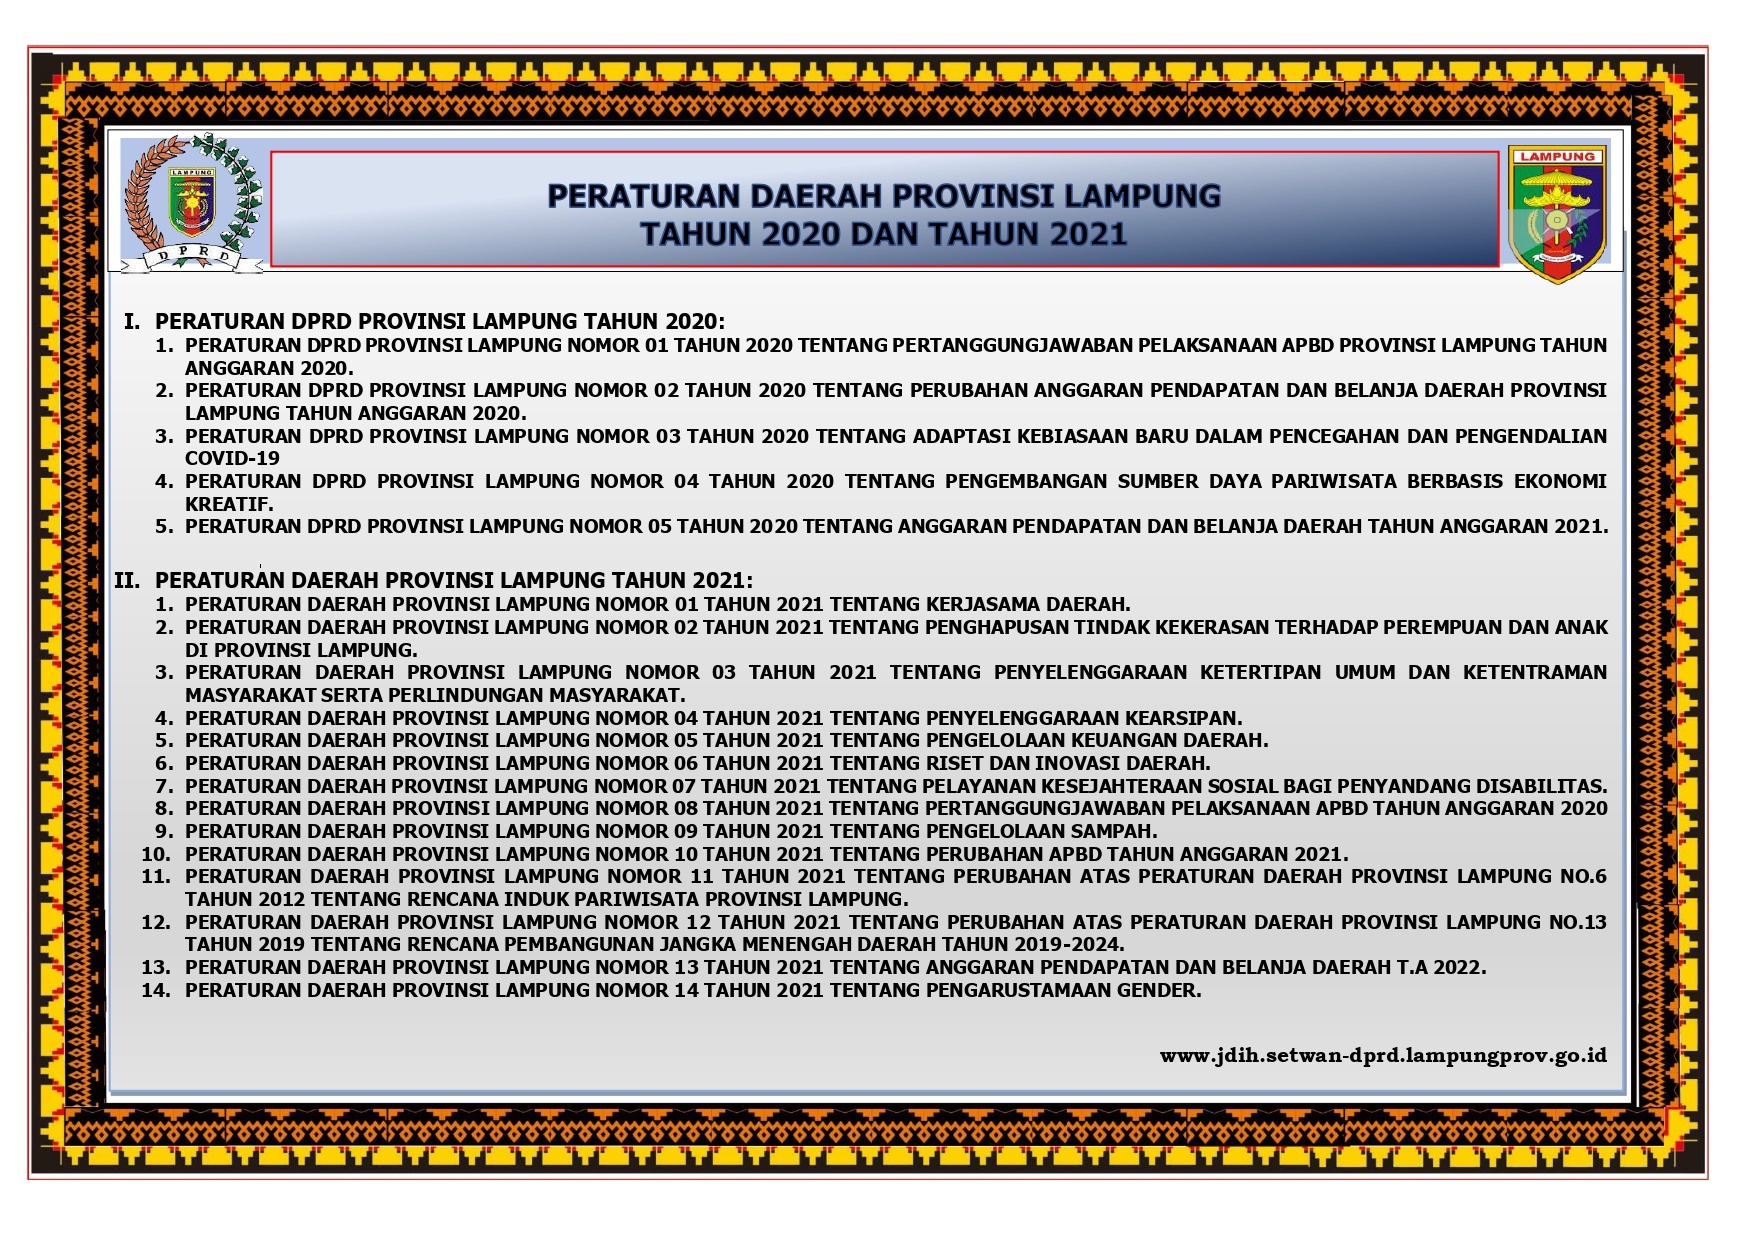 Peraturan Daerah Provinsi Lampung Tahun 2020 dan Tahun 2021